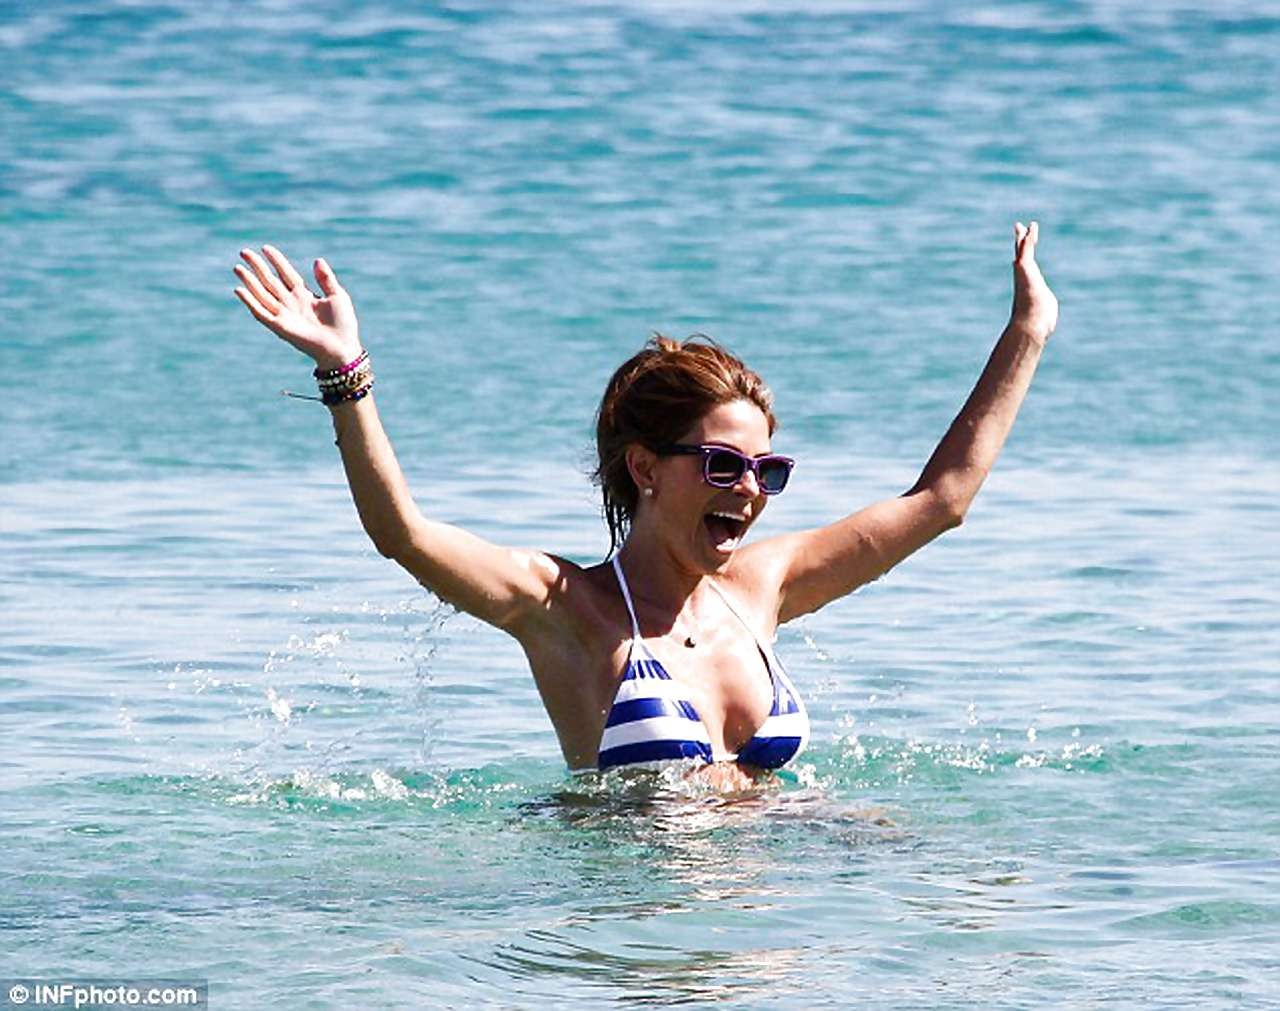 Maria menounos montrant son corps sexy en bikini sur la plage
 #75227680